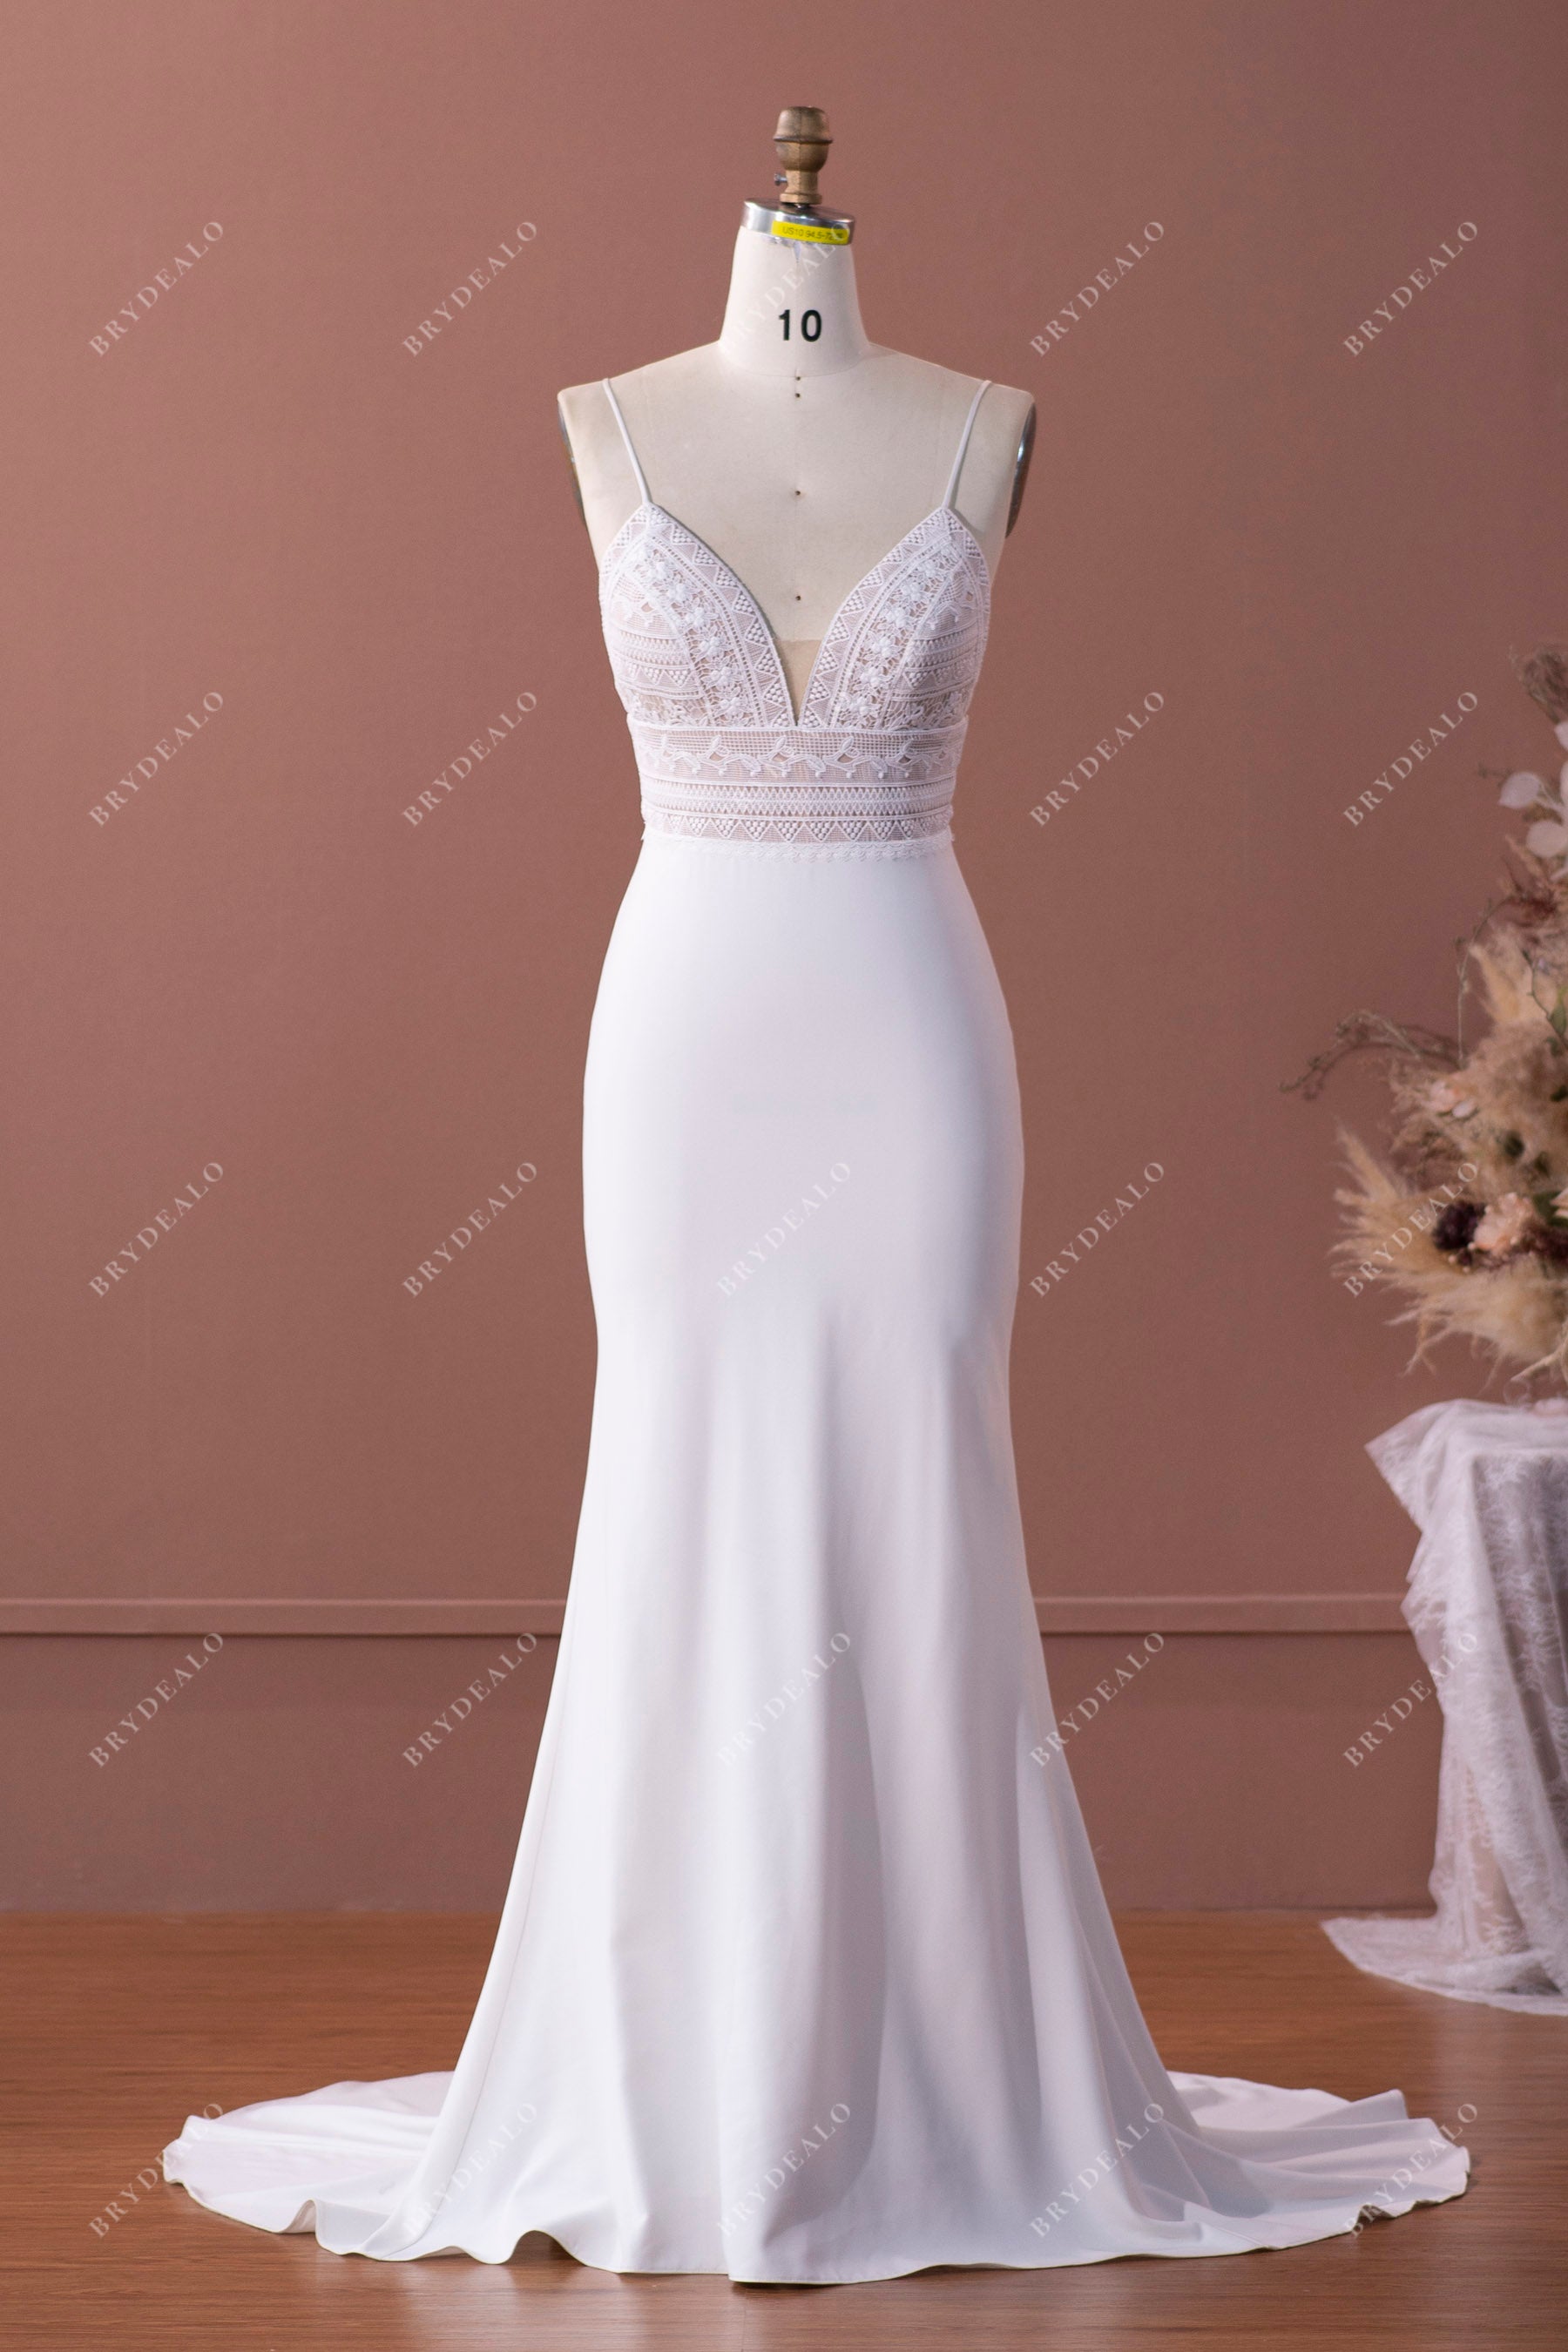 Simple Plunging Lace Crepe Mermaid Wedding Dress